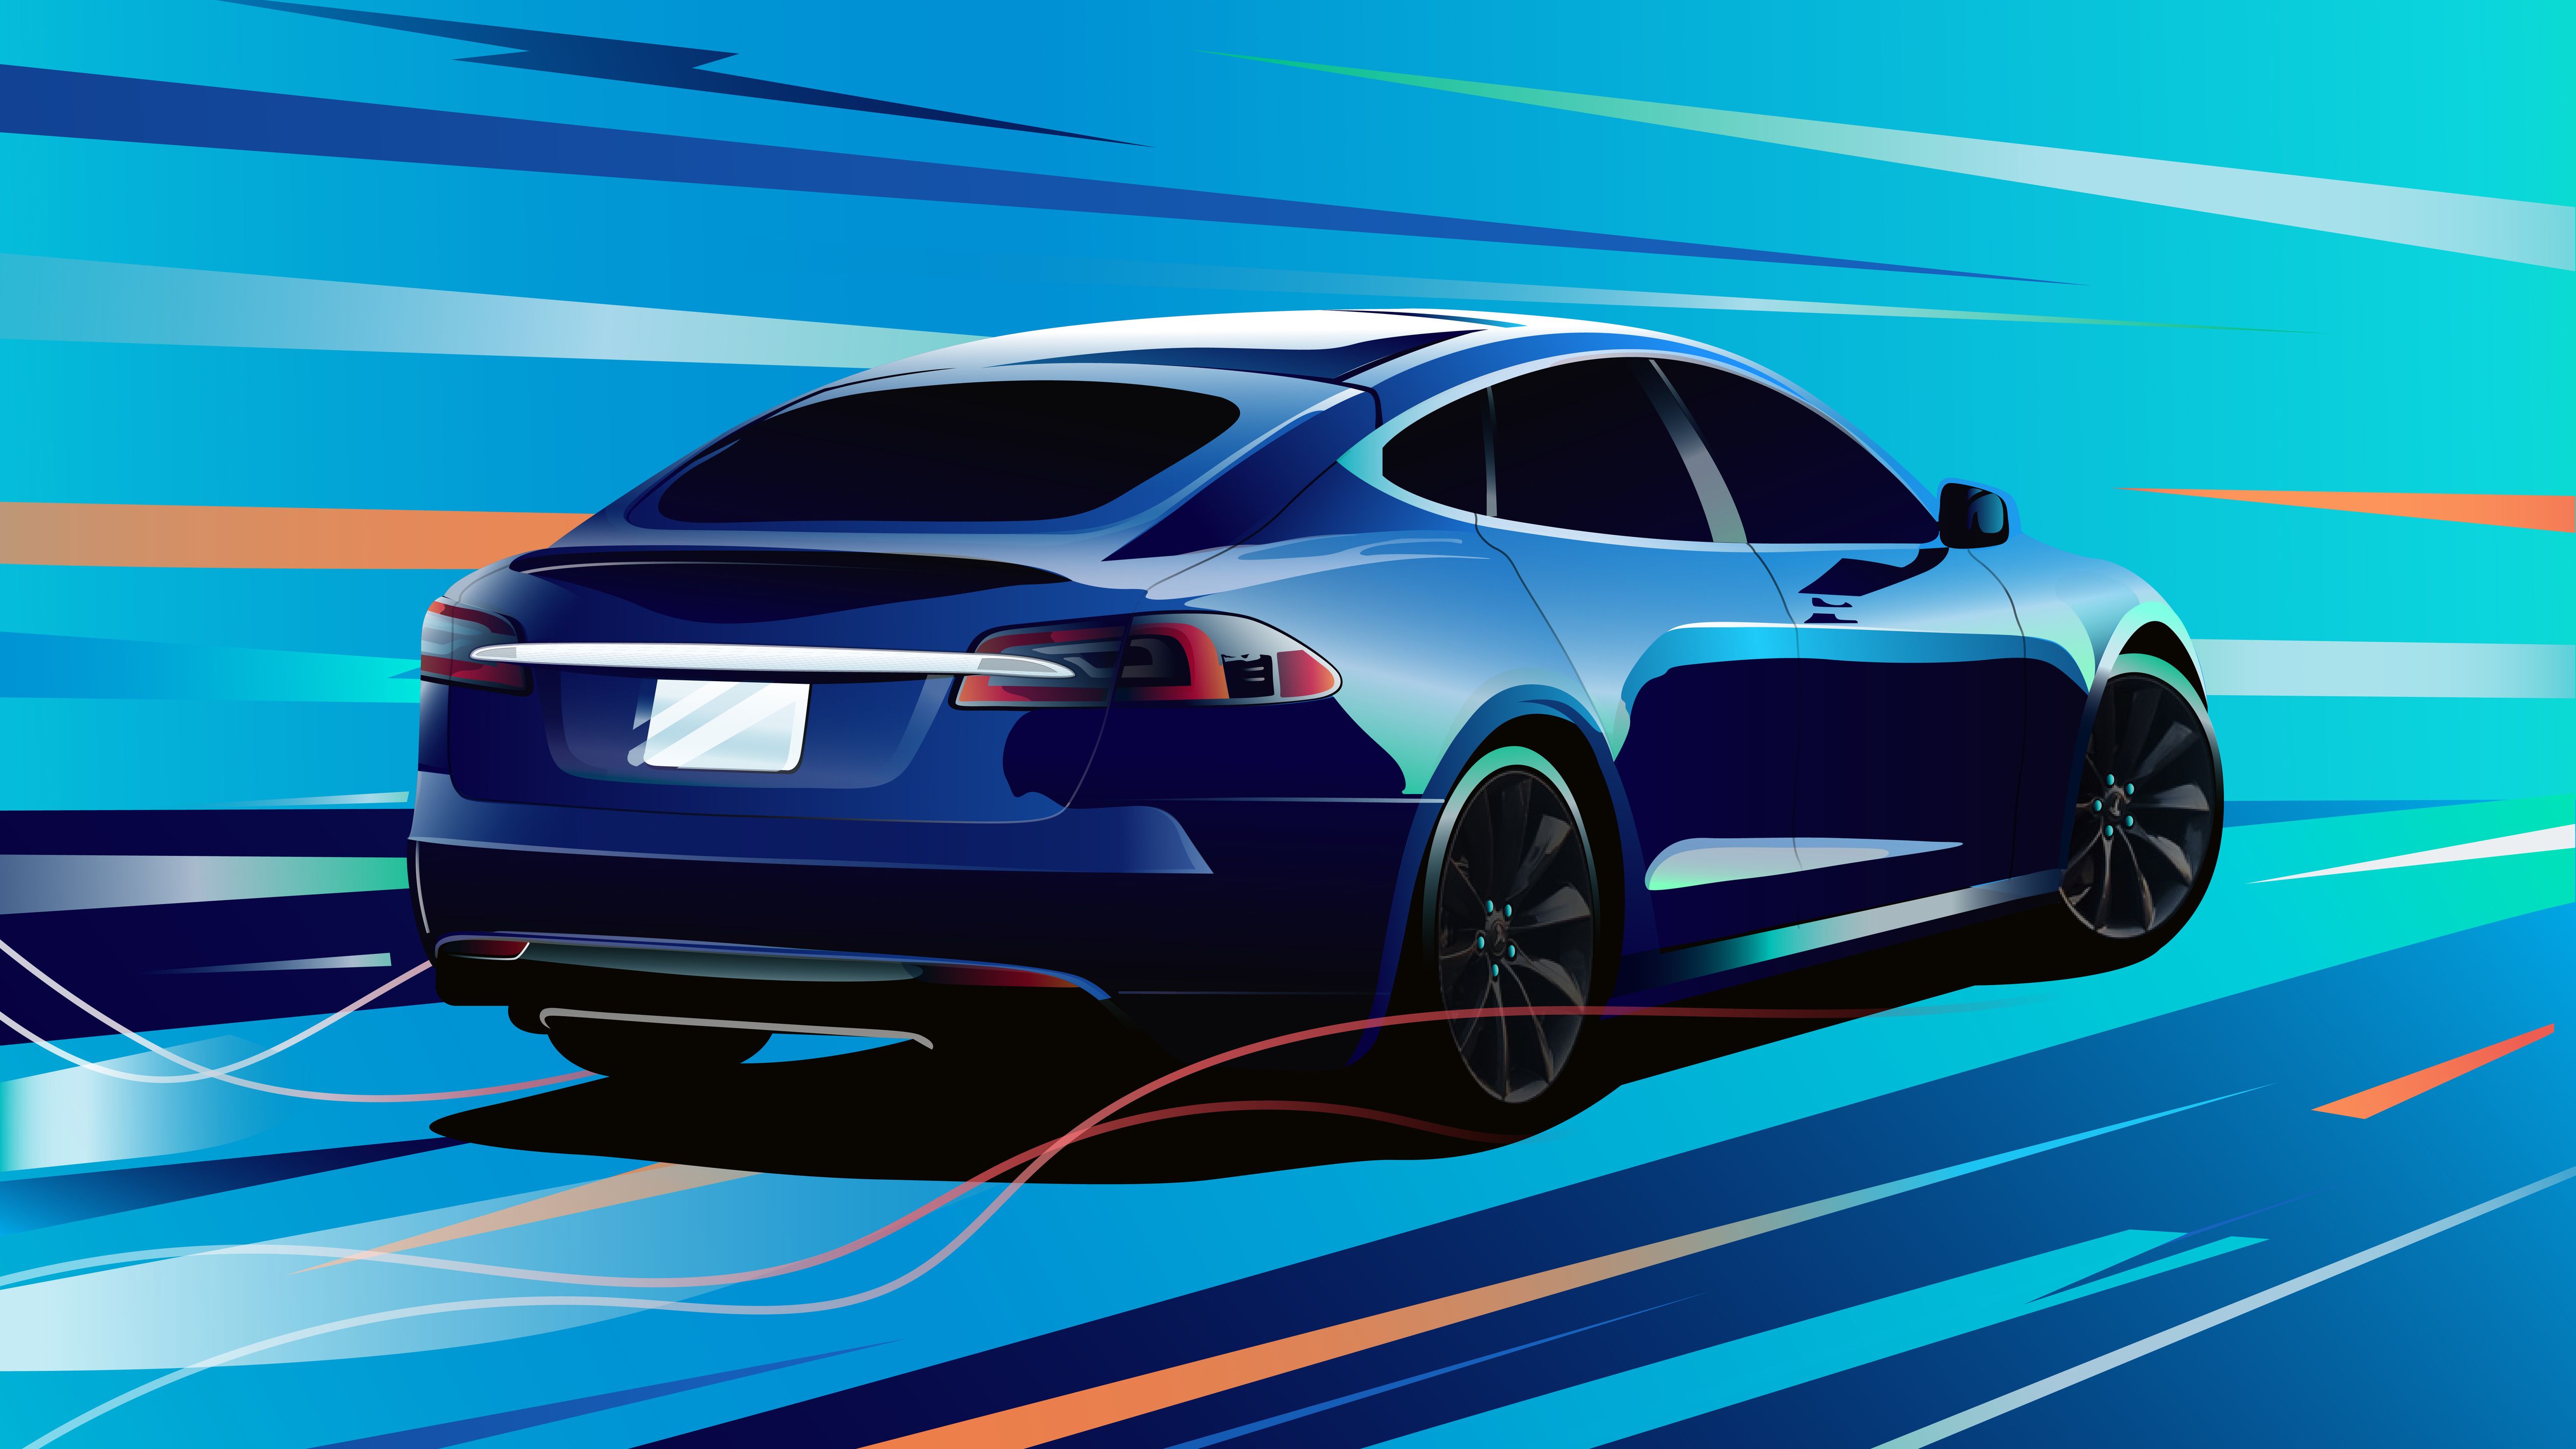 Tesla Model S 5k HD 4k Wallpaper, Image, Background